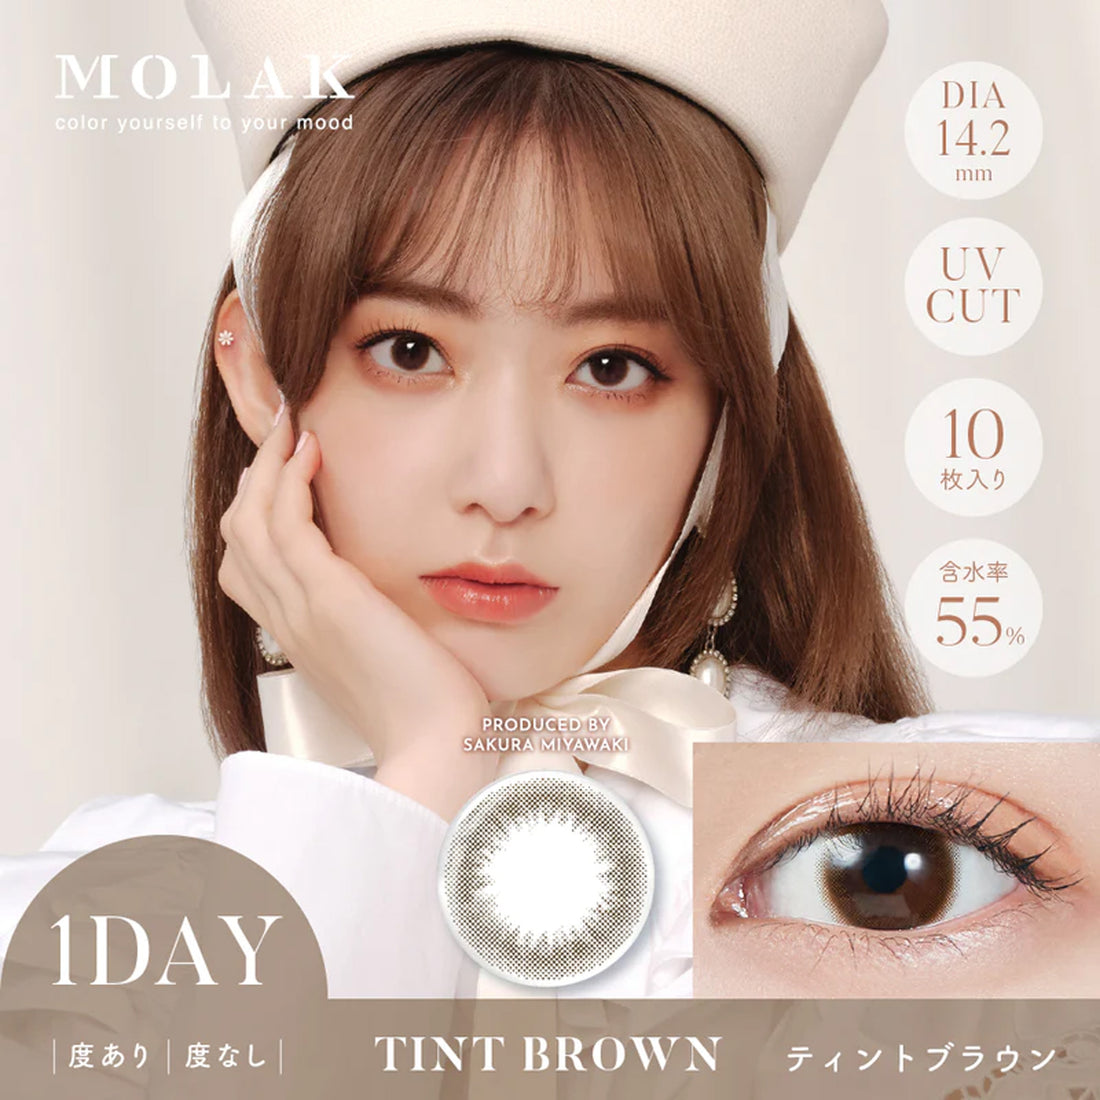 MOLAK Daily Contact Lenses-Tint Brown 10lenses